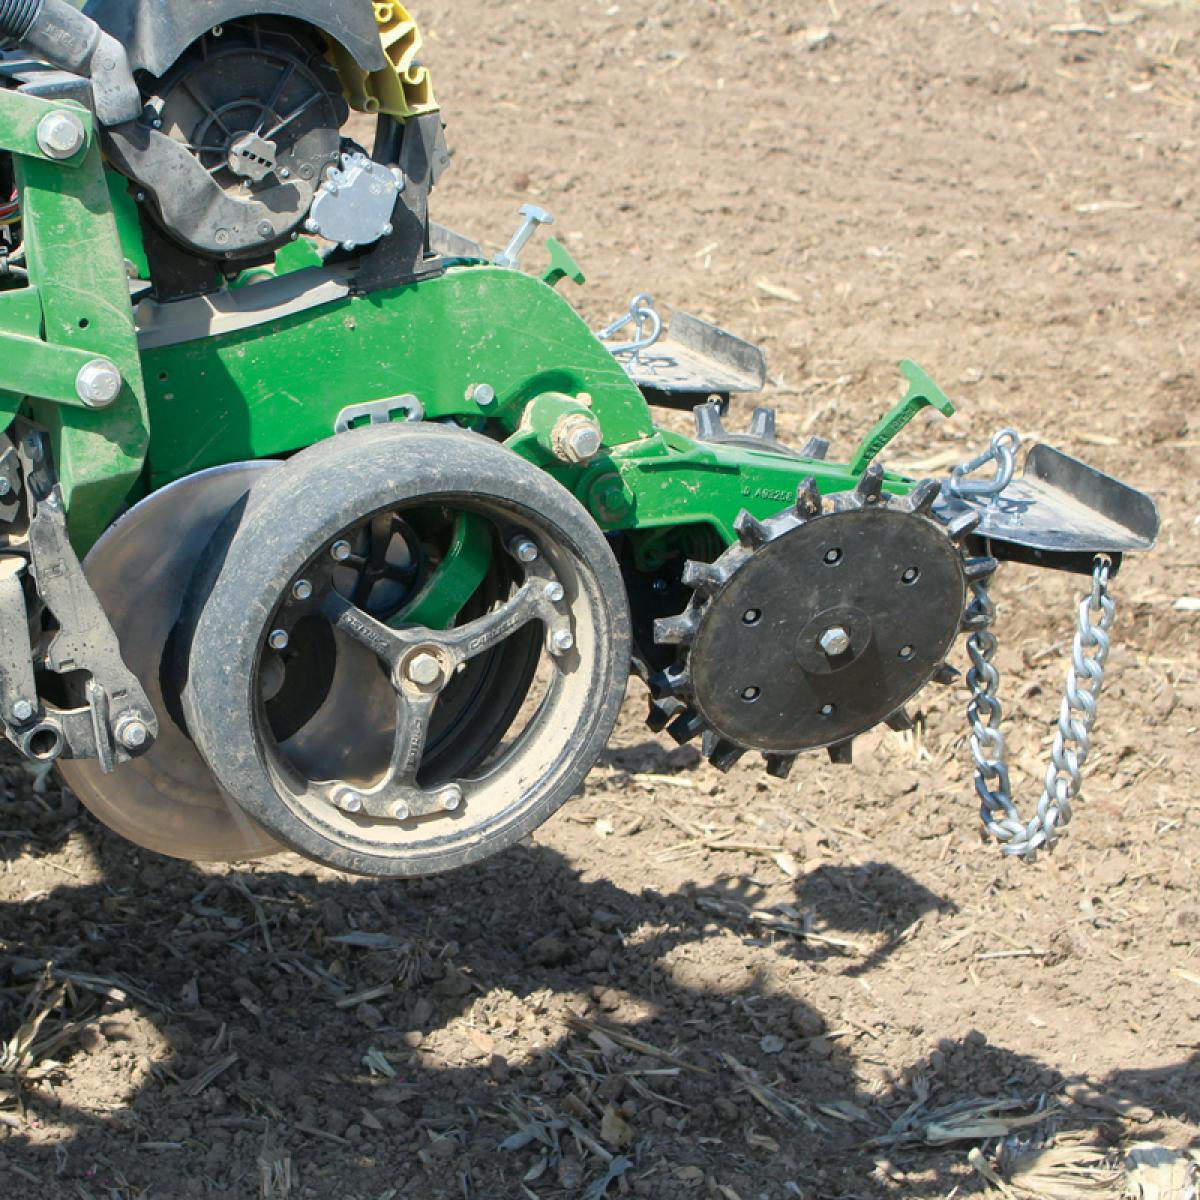 Drag Chain, Twister Closing Wheel, and Spoke Planter Gauge Wheel installed on John Deere planter in the field